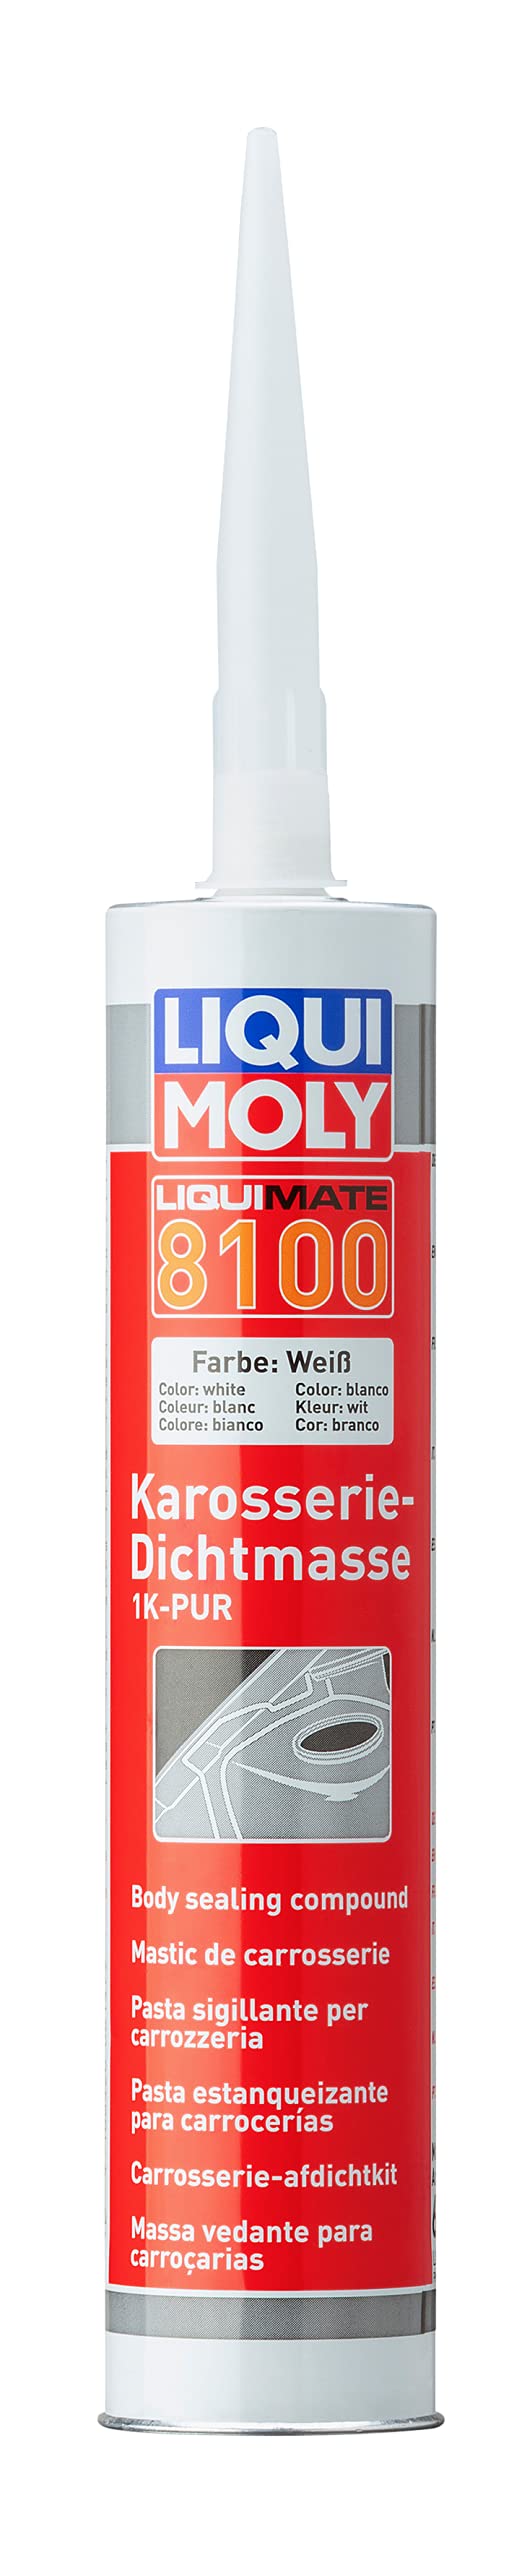 LIQUI MOLY Liquimate 8100 1K-PUR weiss | 300 ml | Karosserieschutz | Dichtstoff | Unterbodenschutz | Art.-Nr.: 6147 von Liqui Moly